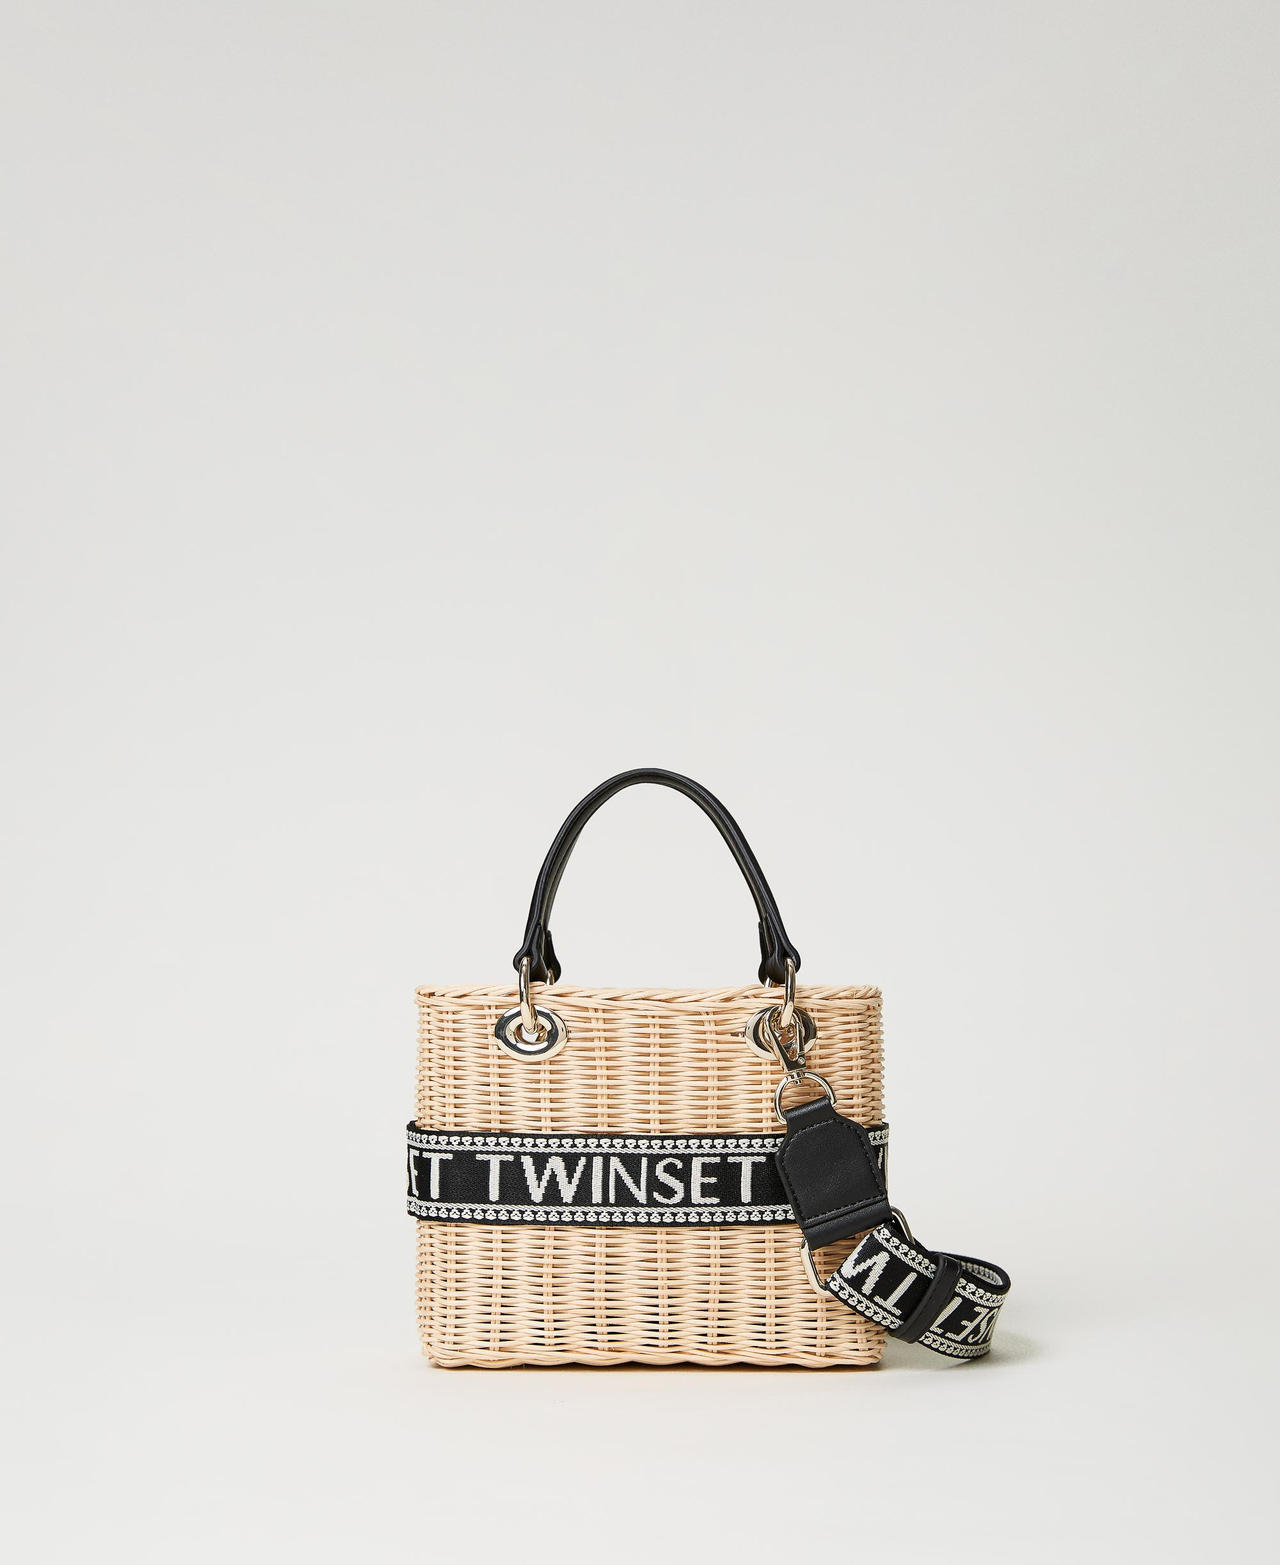 Christian Dior Wicker Basket Bag  Find Review 